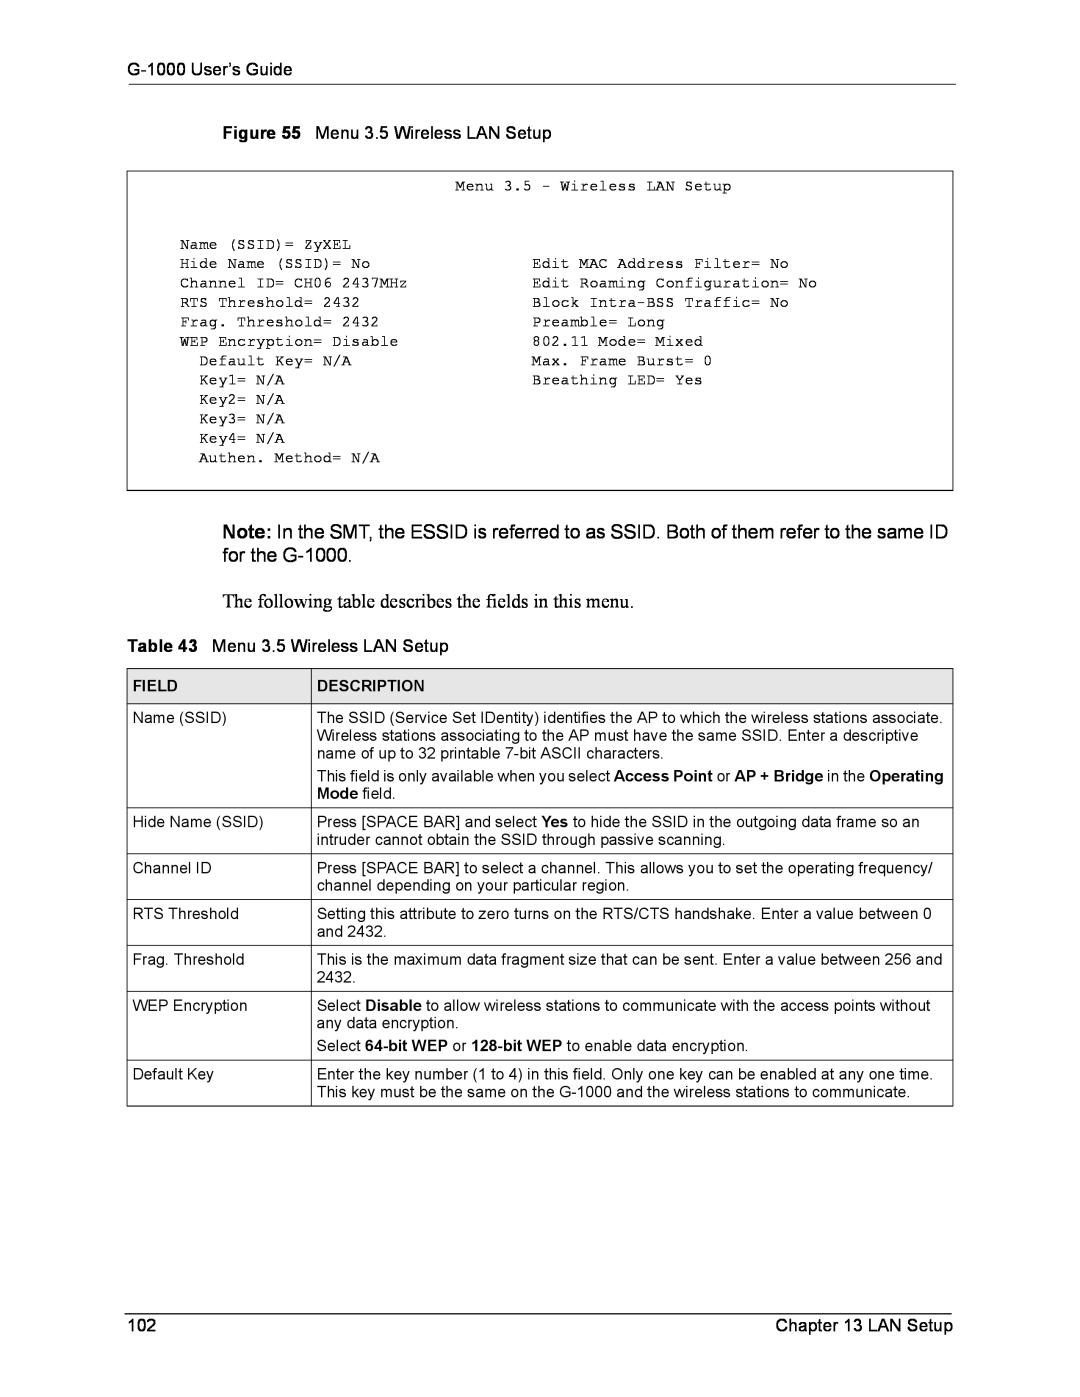 ZyXEL Communications manual G-1000 User’s Guide Menu 3.5 Wireless LAN Setup, Field, Description 